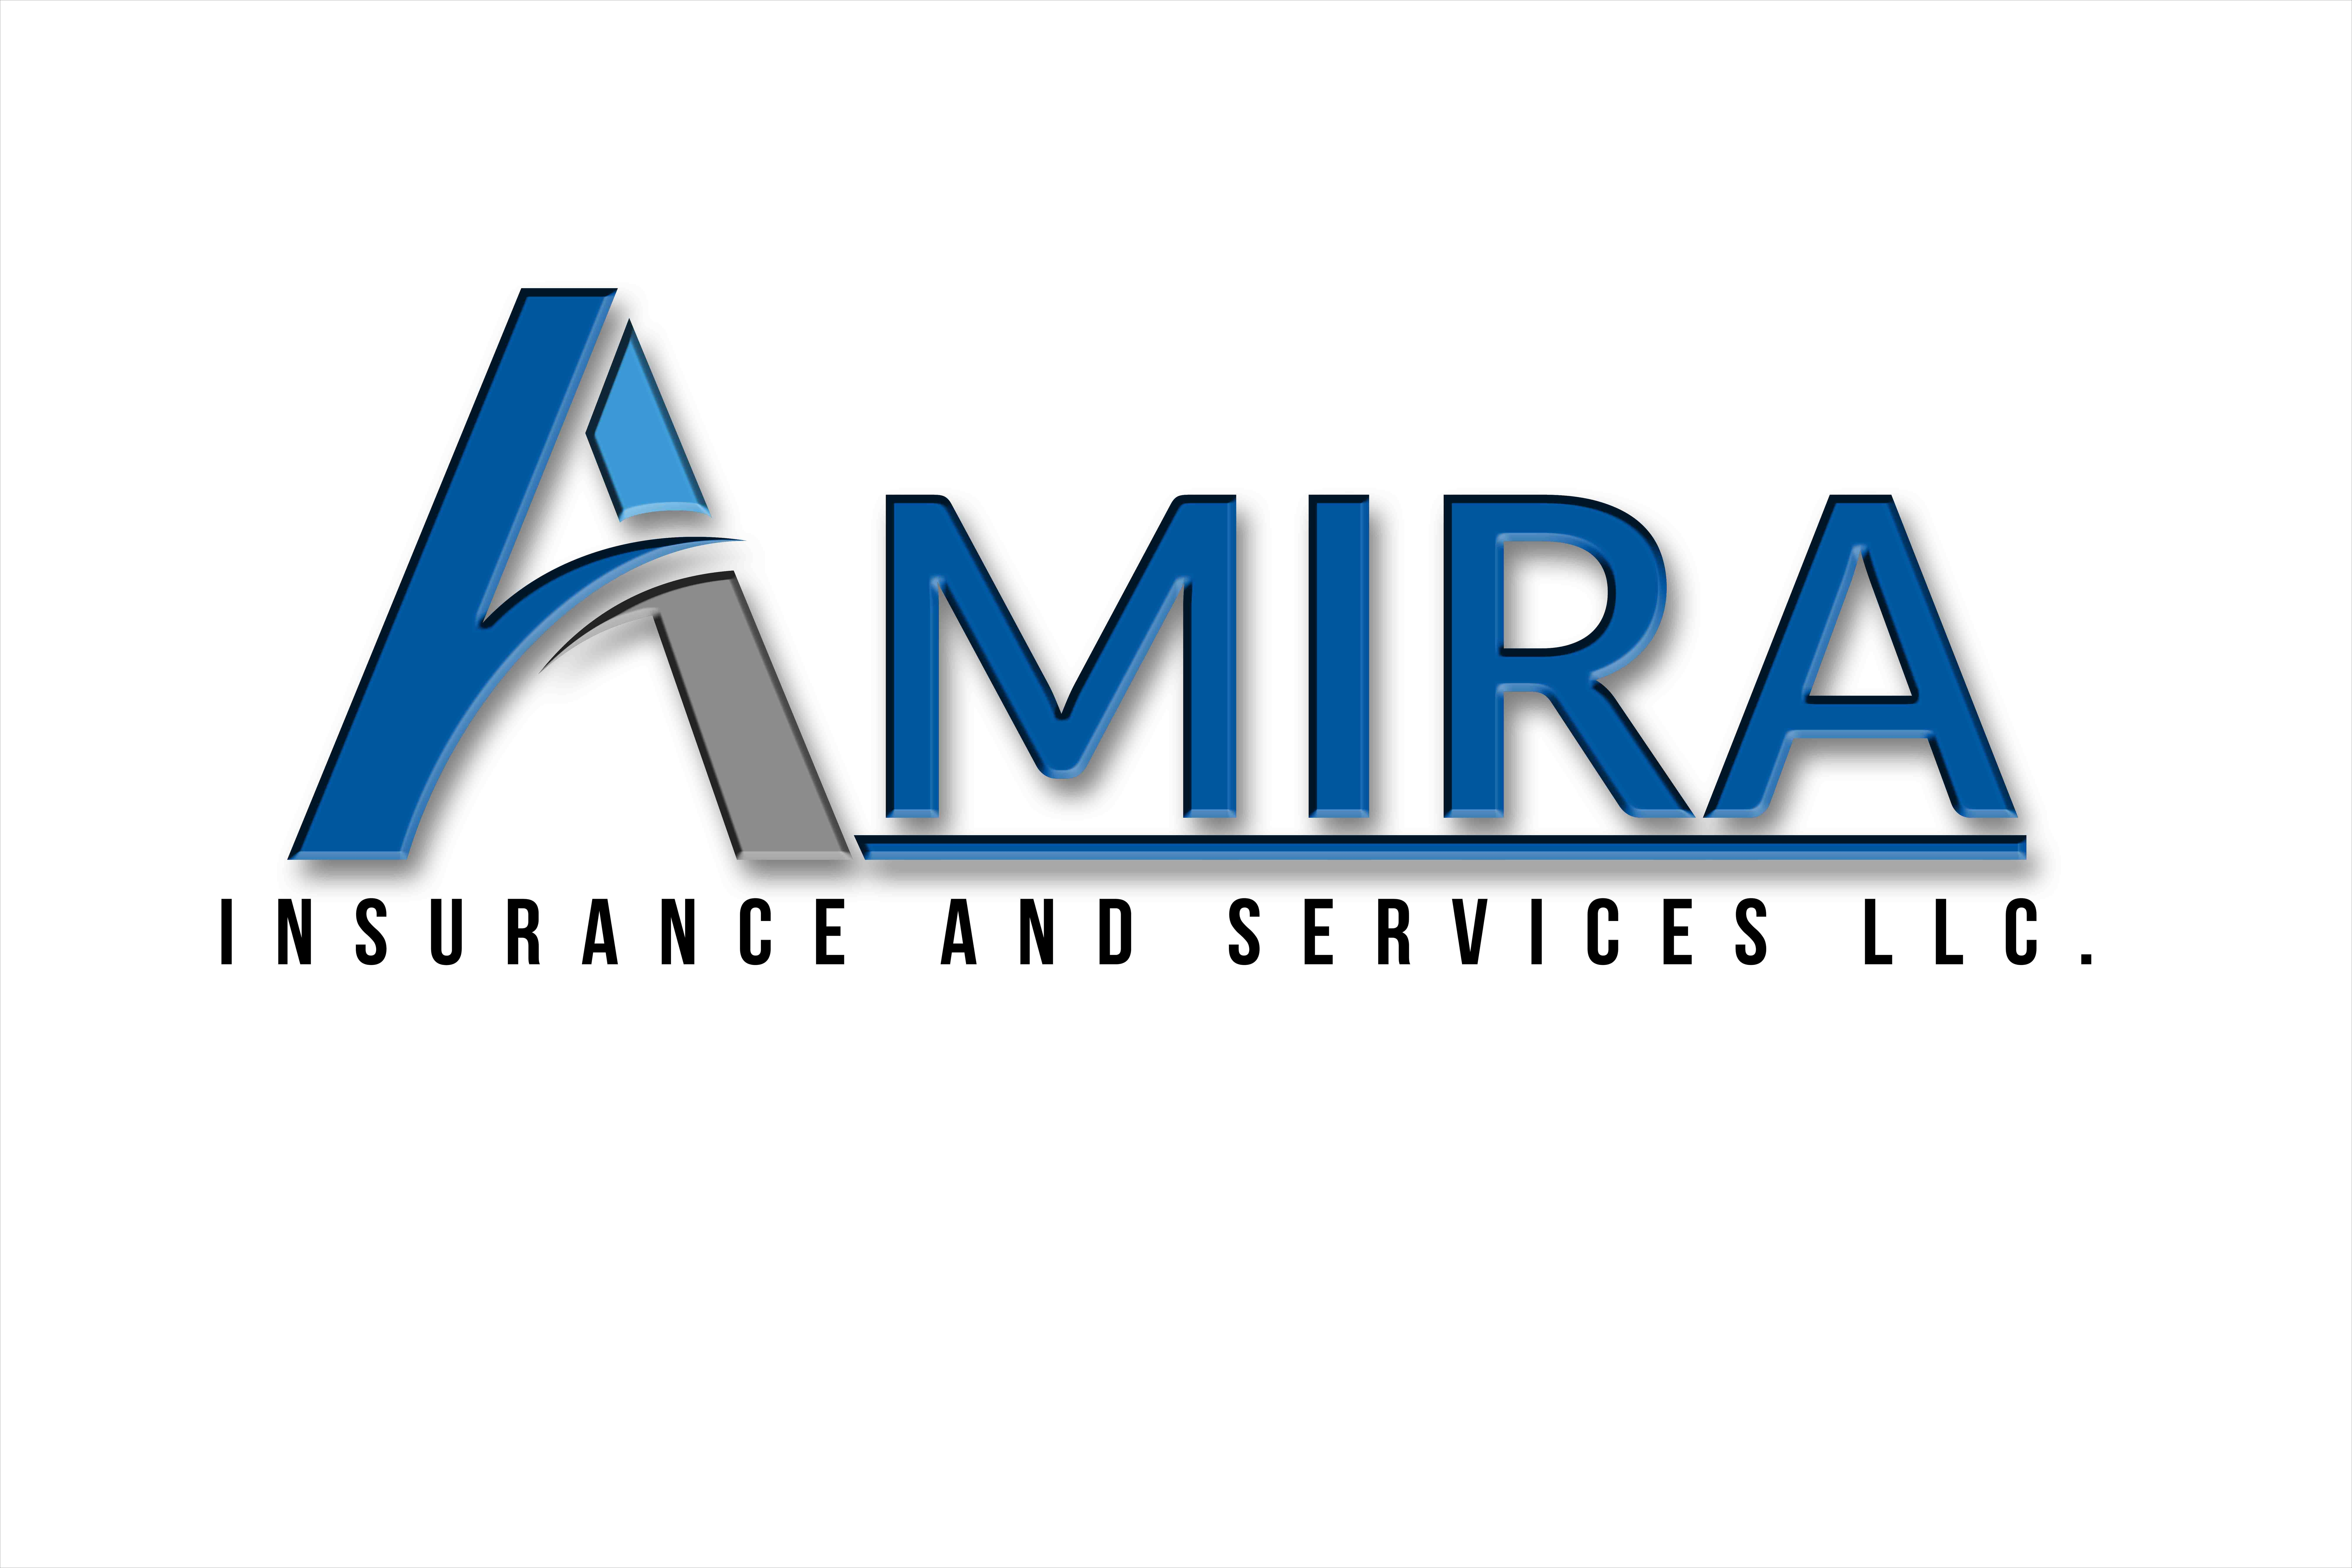 Amira Insurance